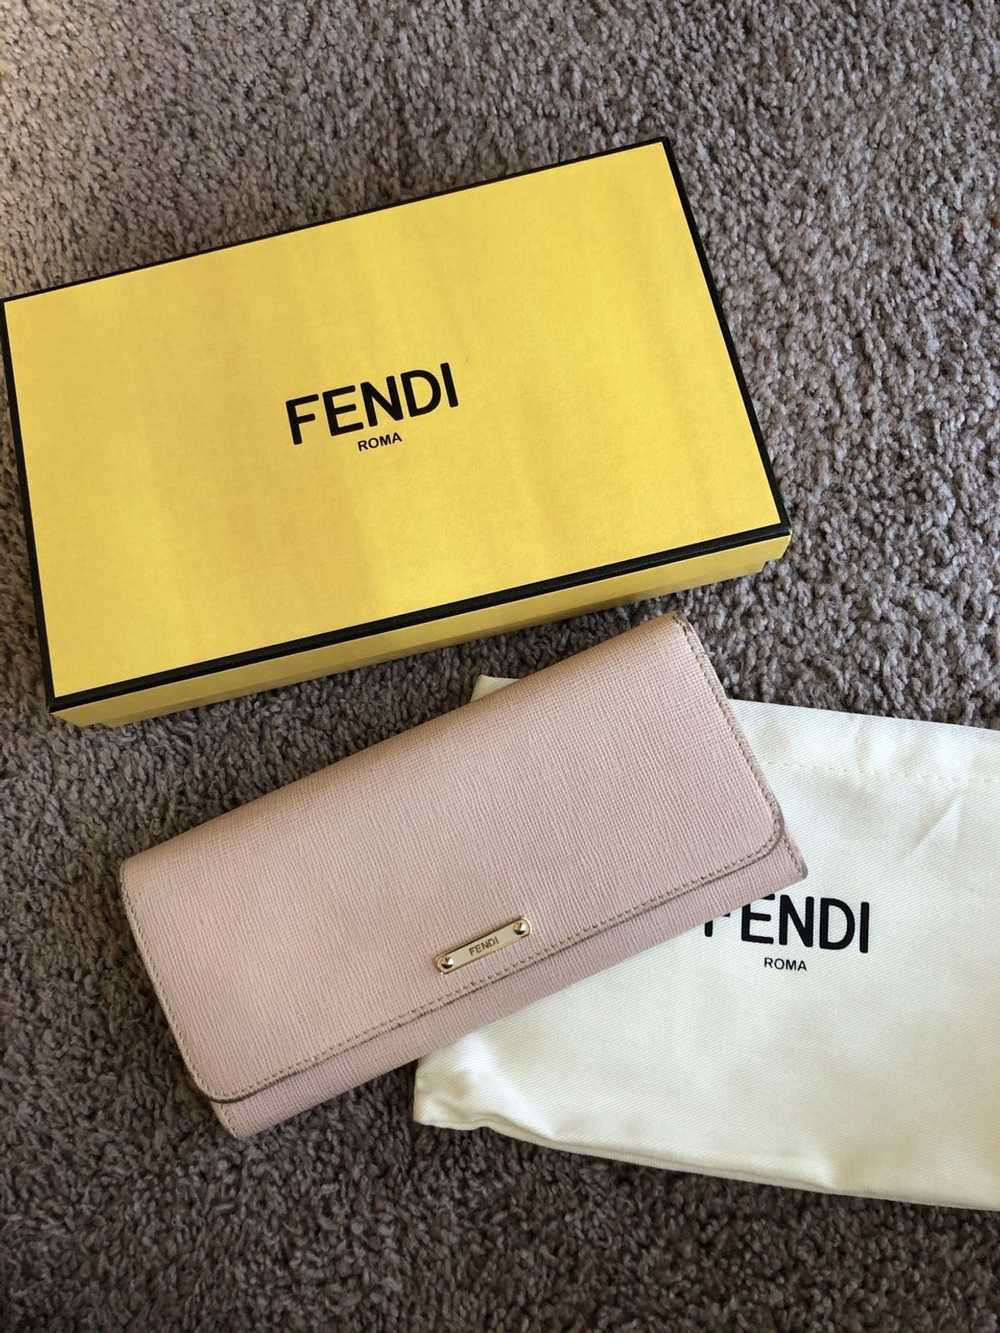 Fendi Fendi pink leather logo long wallet - image 1